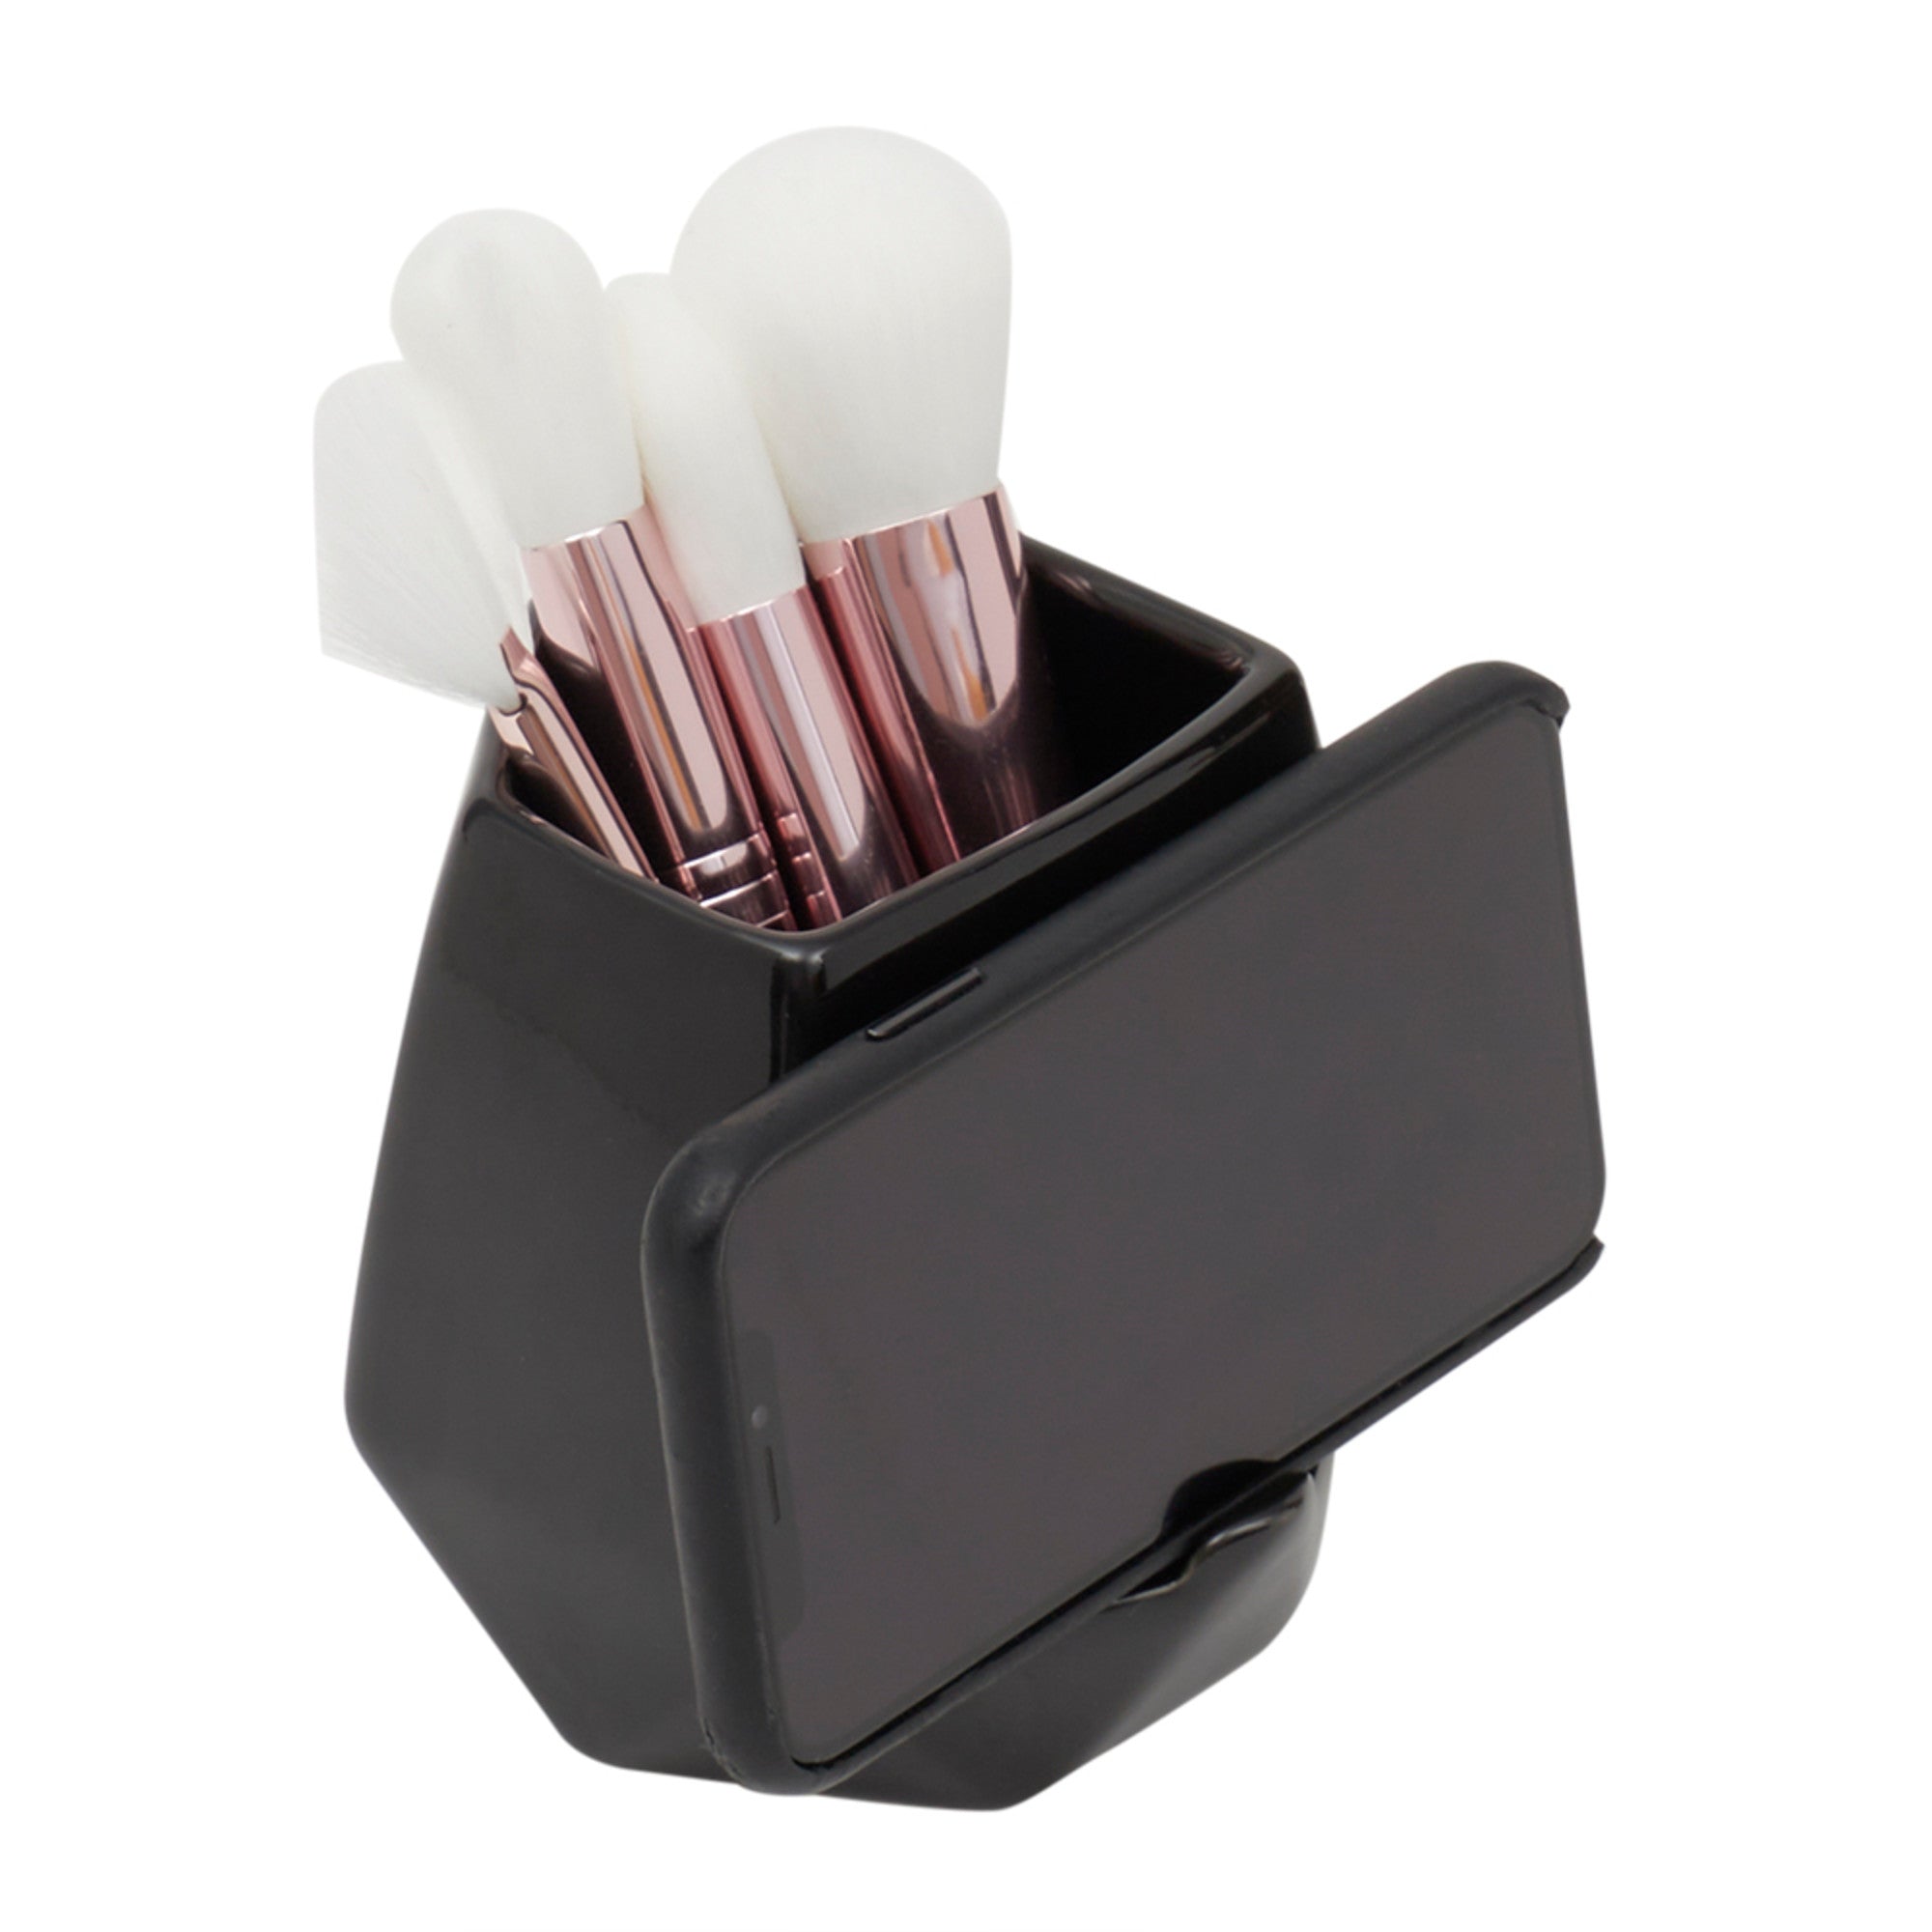 Home Basics Ceramic Make Up Brush and Phone Holder - Assorted Colors